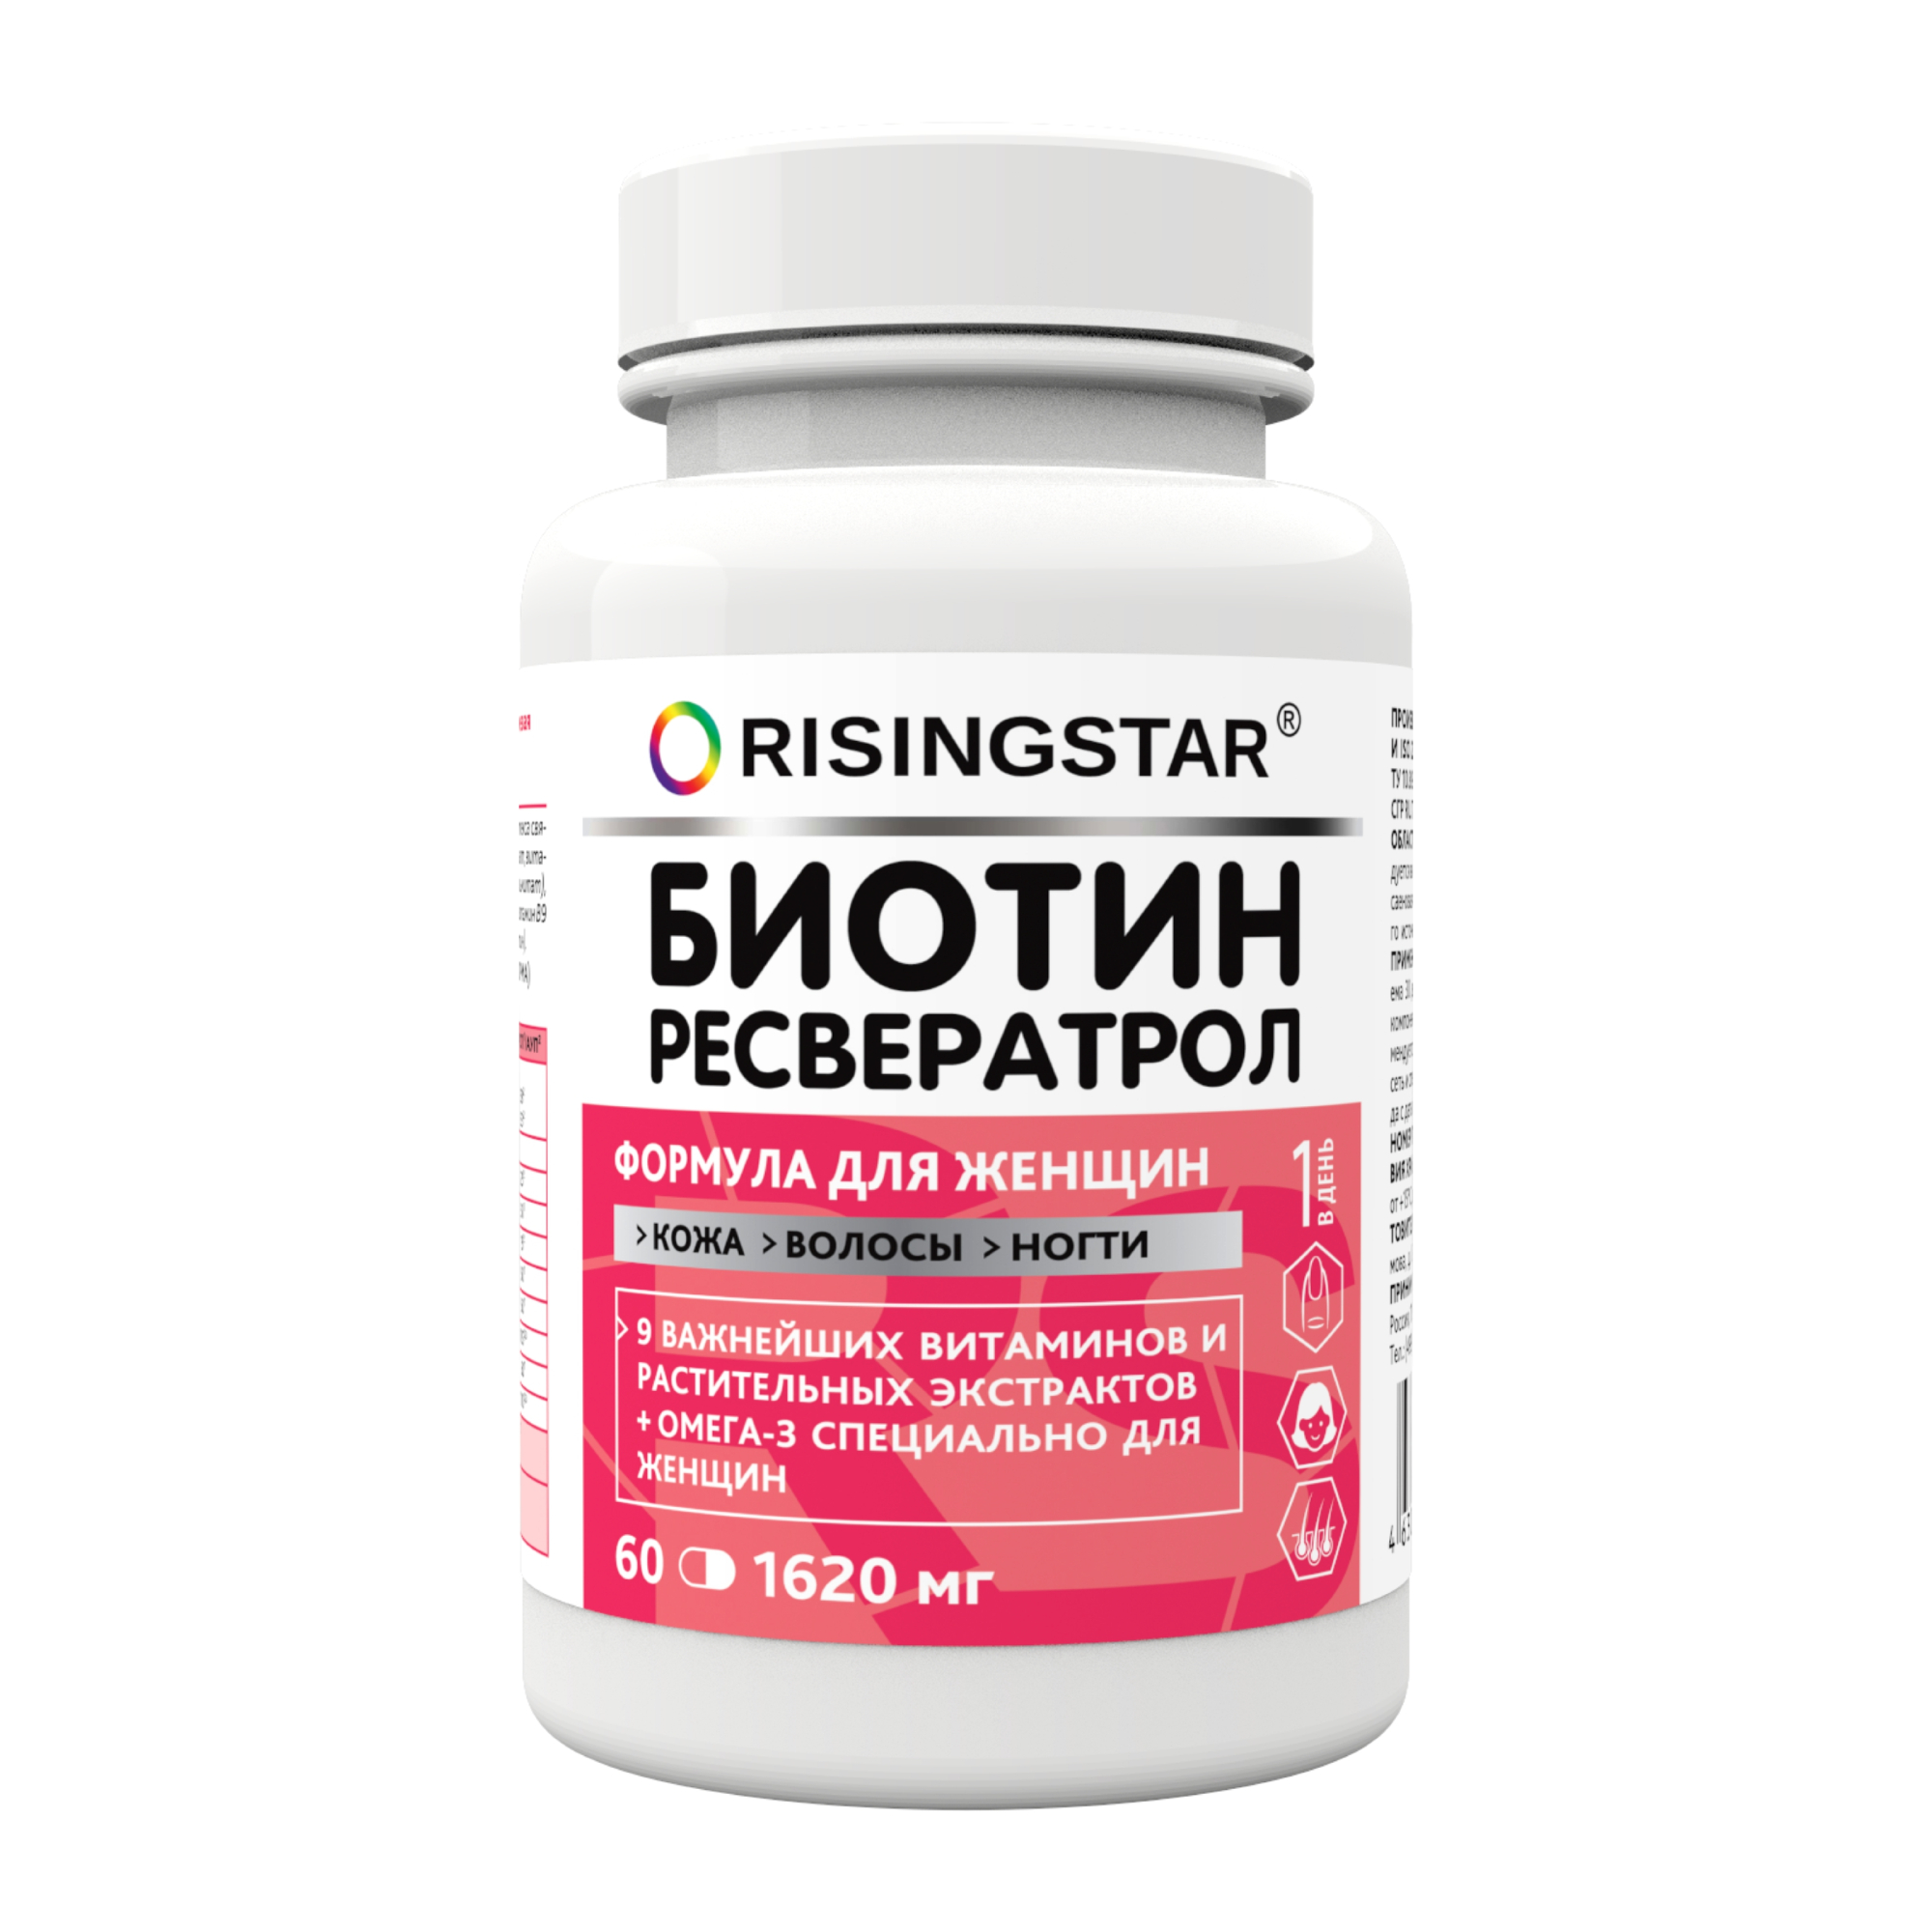 БАД Risingstar биотин+фолиевая кислота с омега-3 для женщин 60 таблеток, 100 г бад risingstar биотин фолиевая кислота с омега 3 для женщин 60 таблеток 100 г